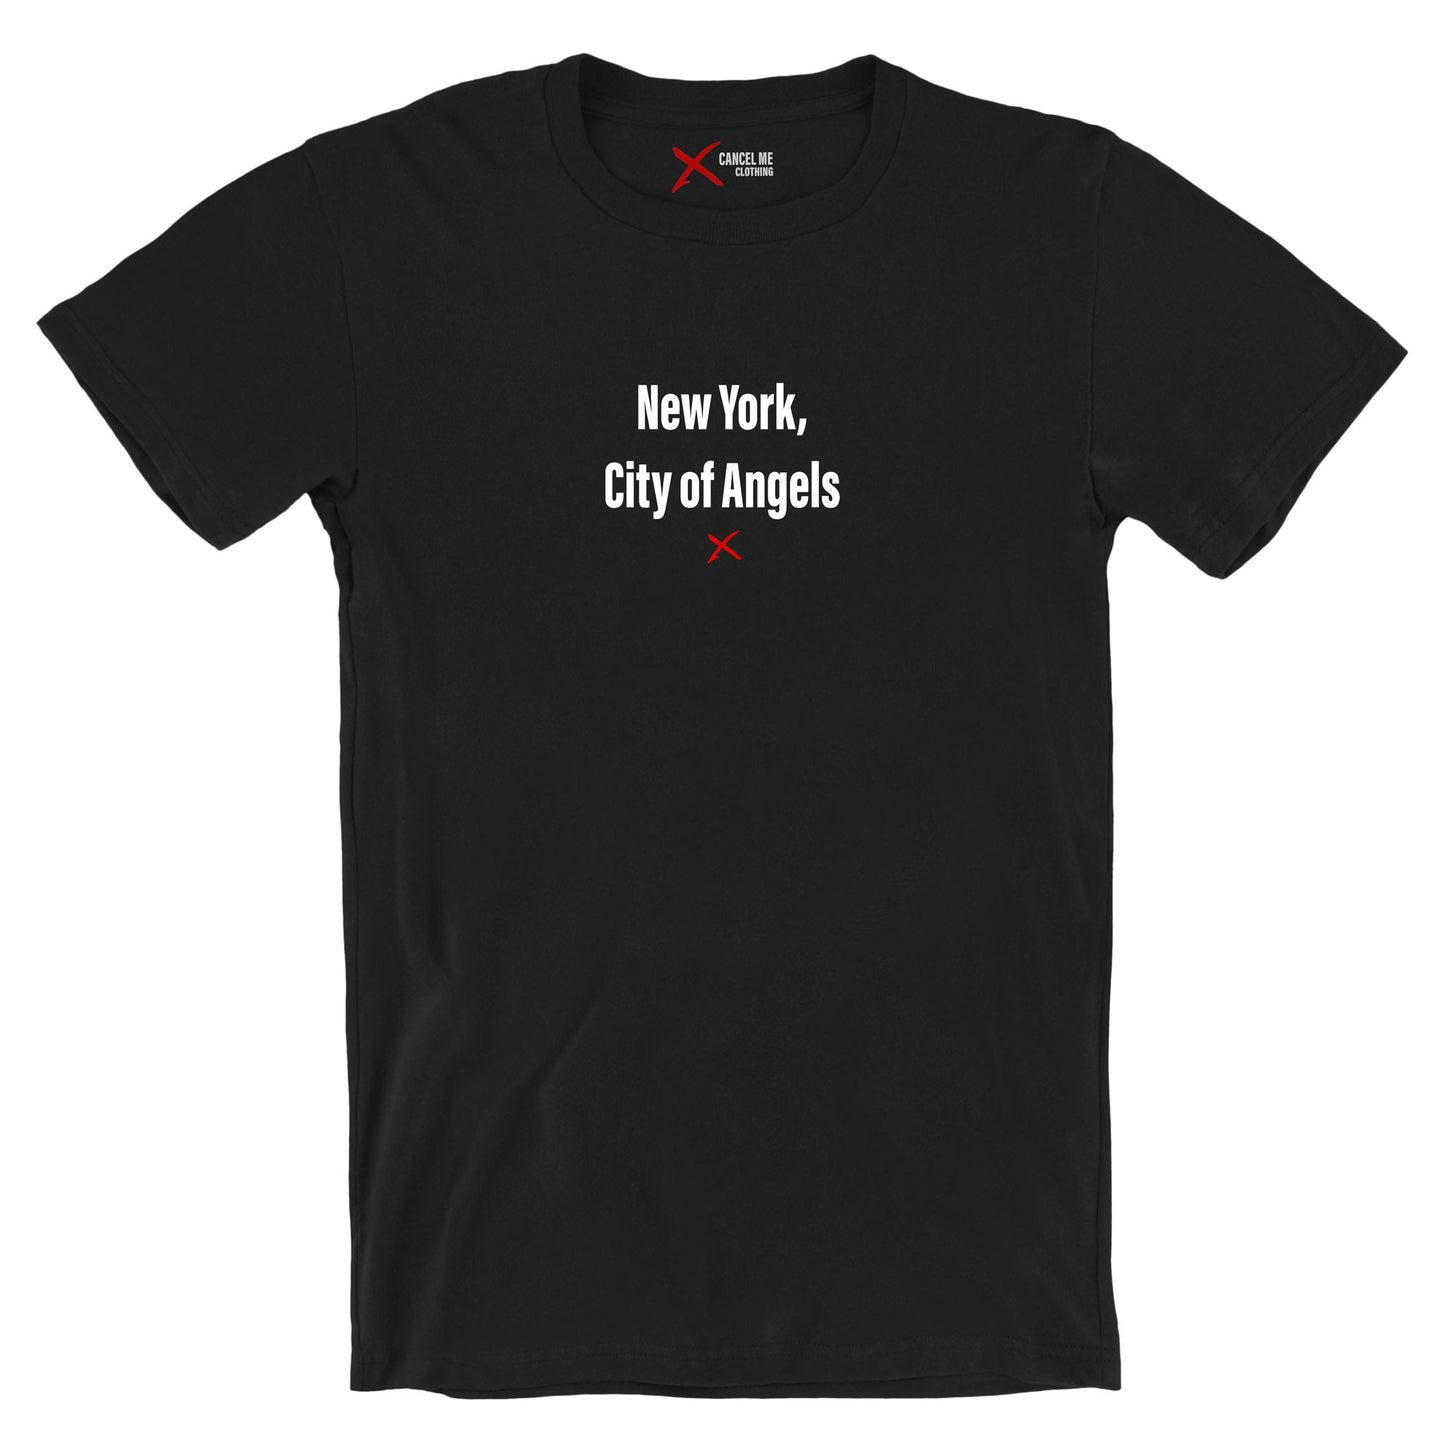 New York, City of Angels - Shirt